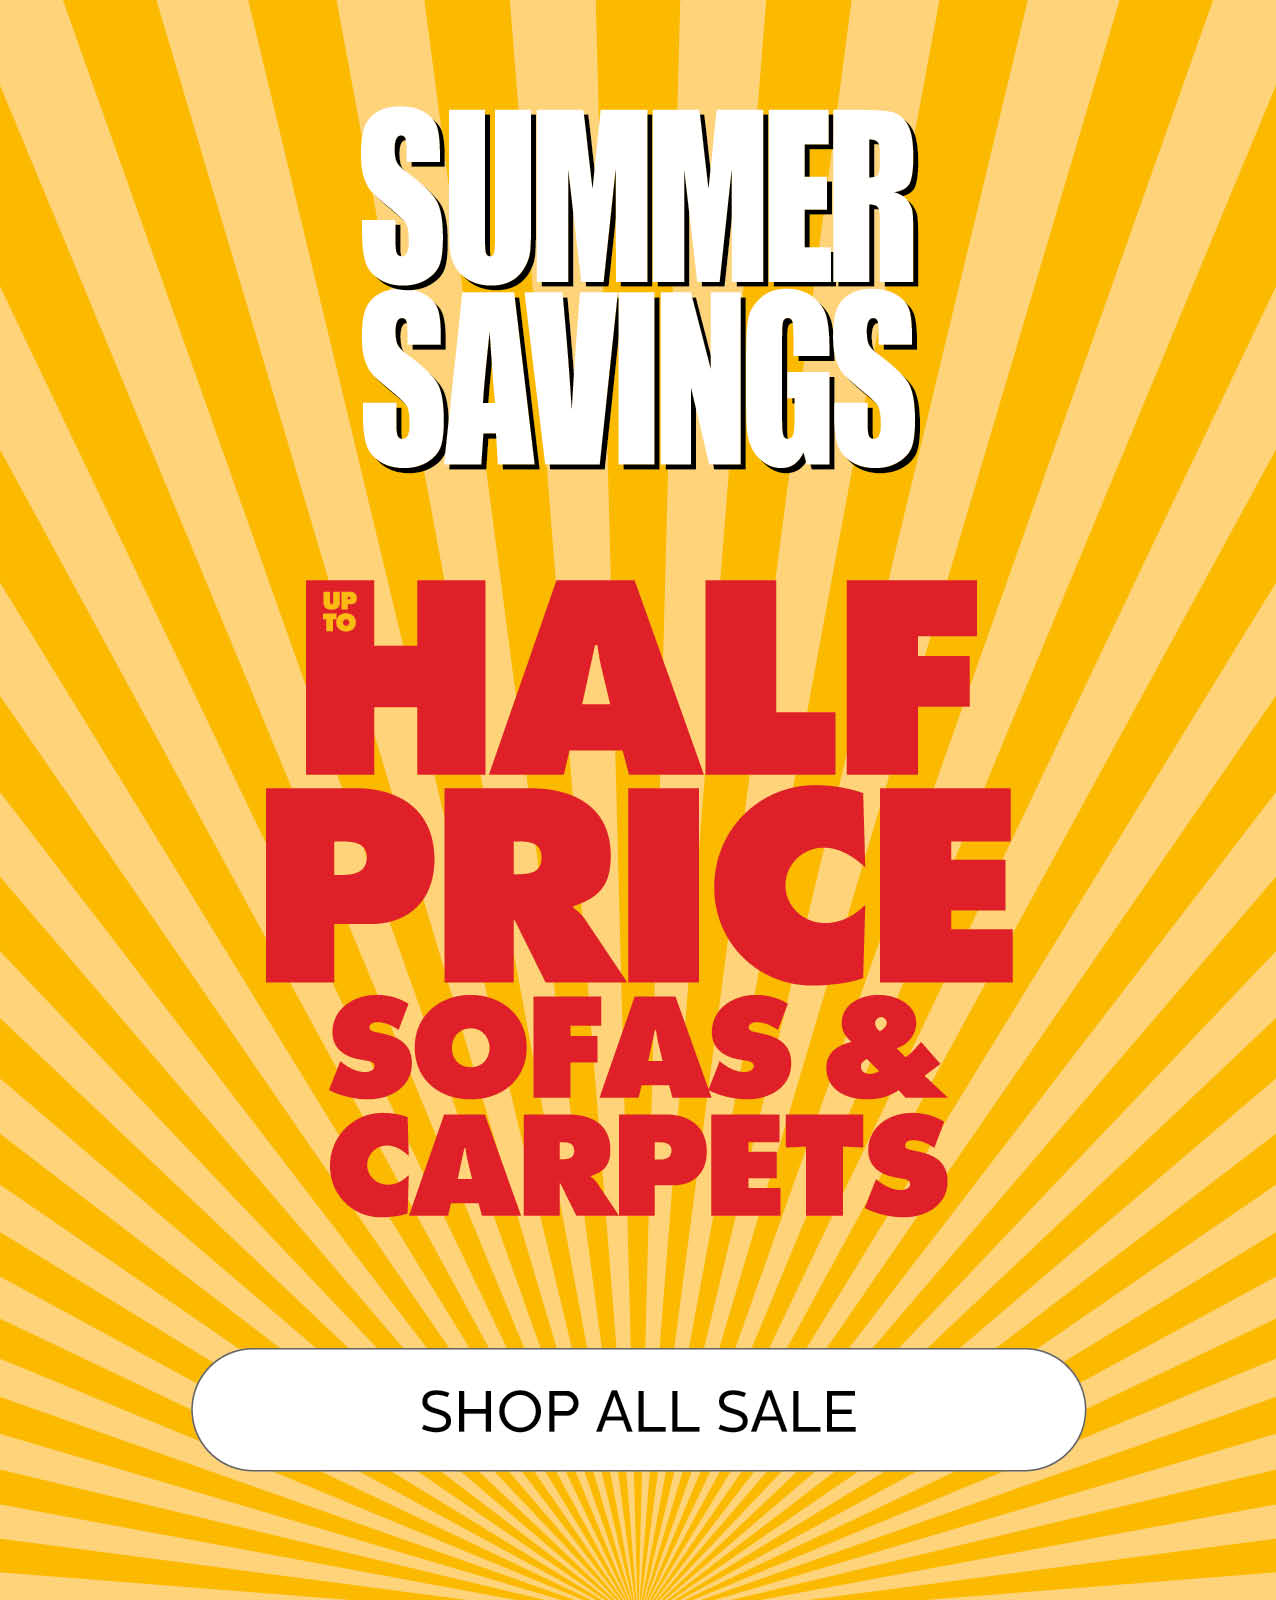 Summer Savings - Up to half price sofas and carpets